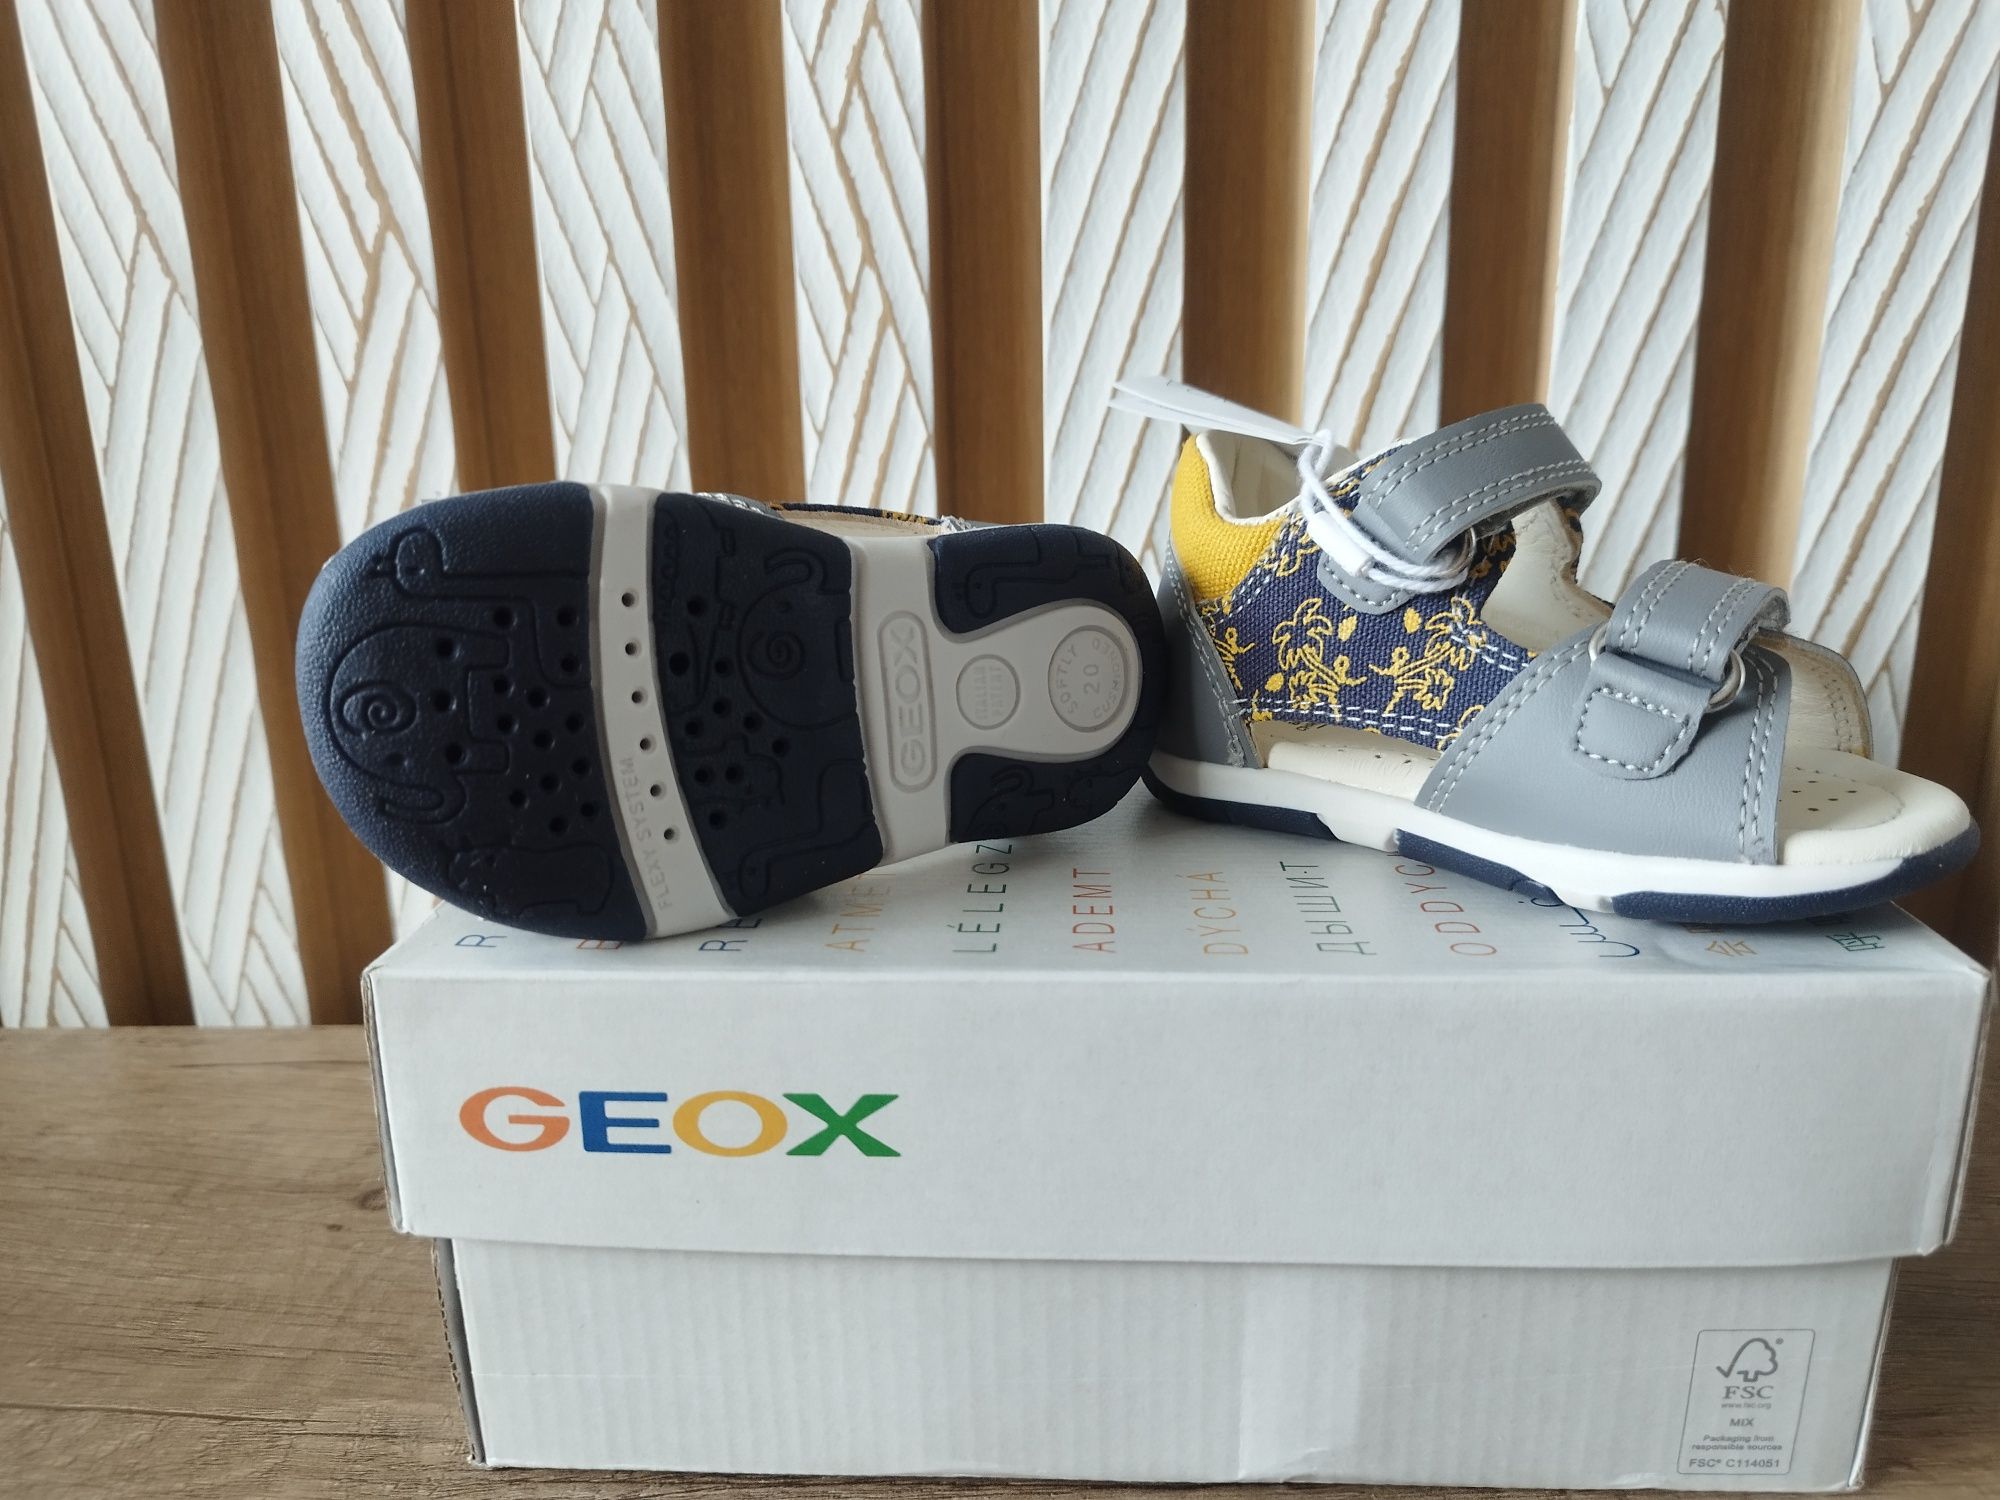 Нови бебешки обувки / сандали Geox